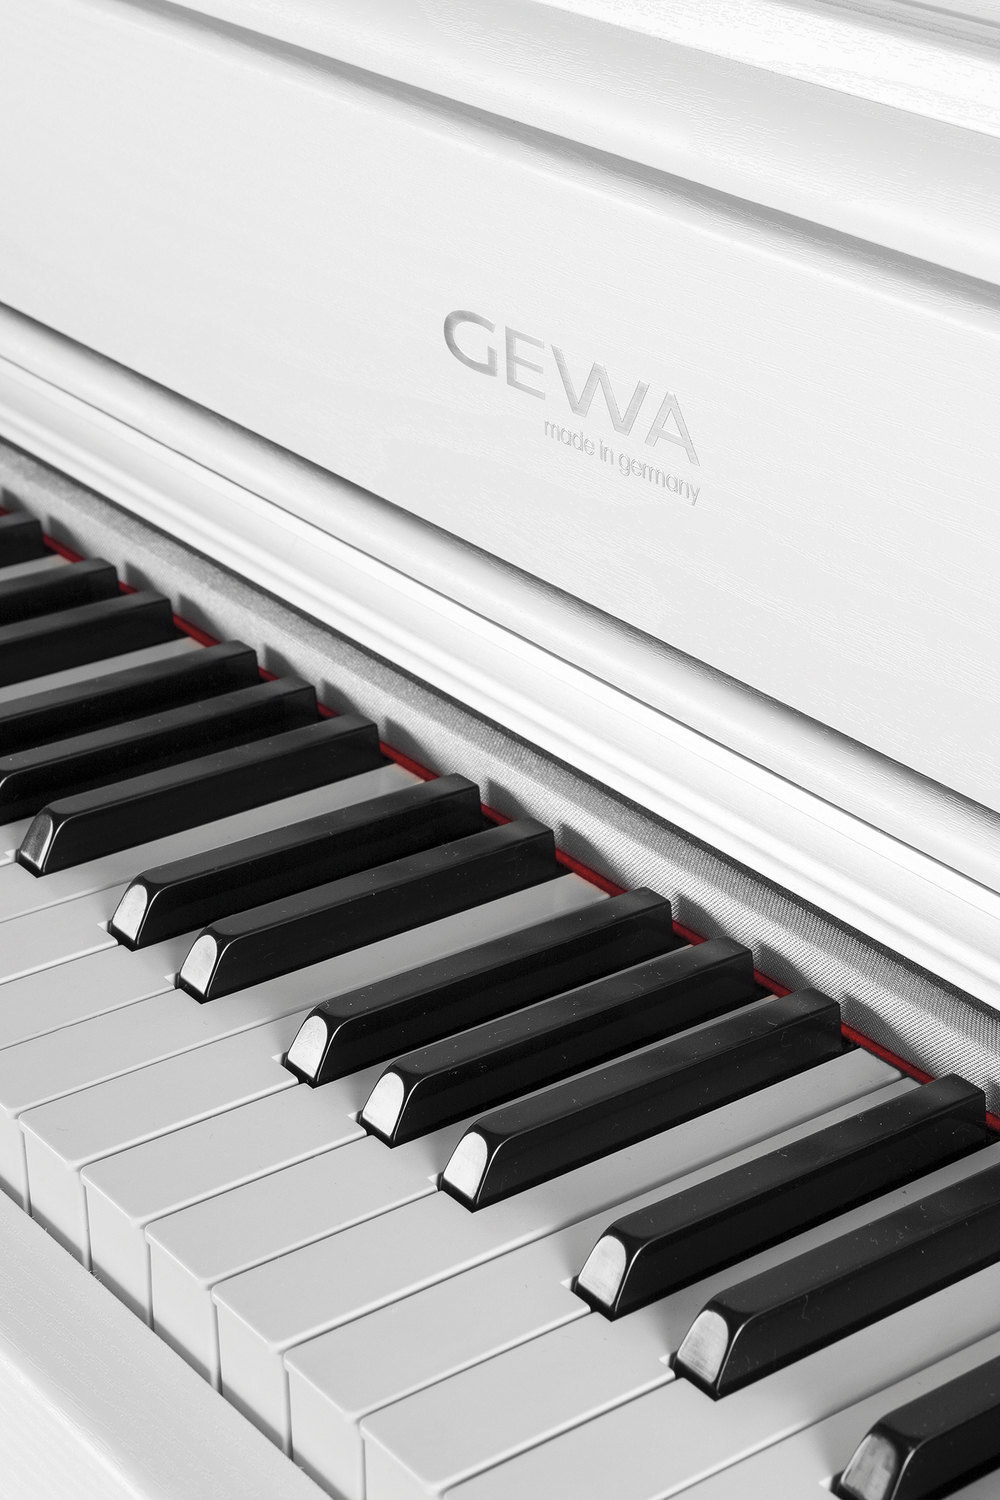 Gewa Up 385 G Blanc - Piano digital con mueble - Variation 4